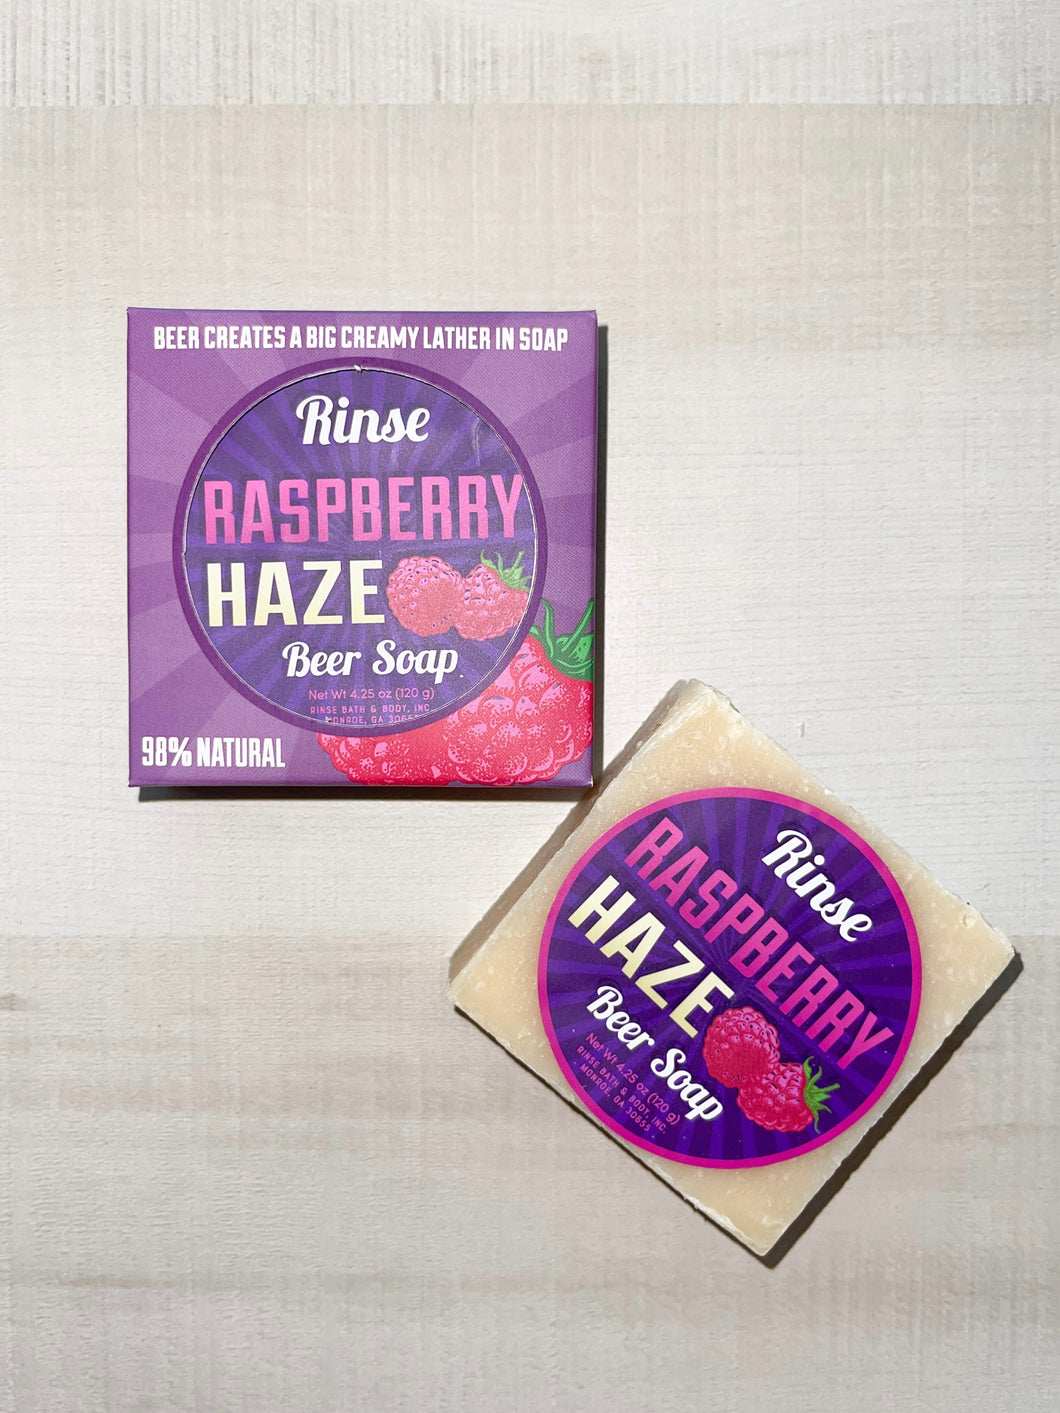 Rinse Bath & Body Co. Beer Soap - Rasberry Haze